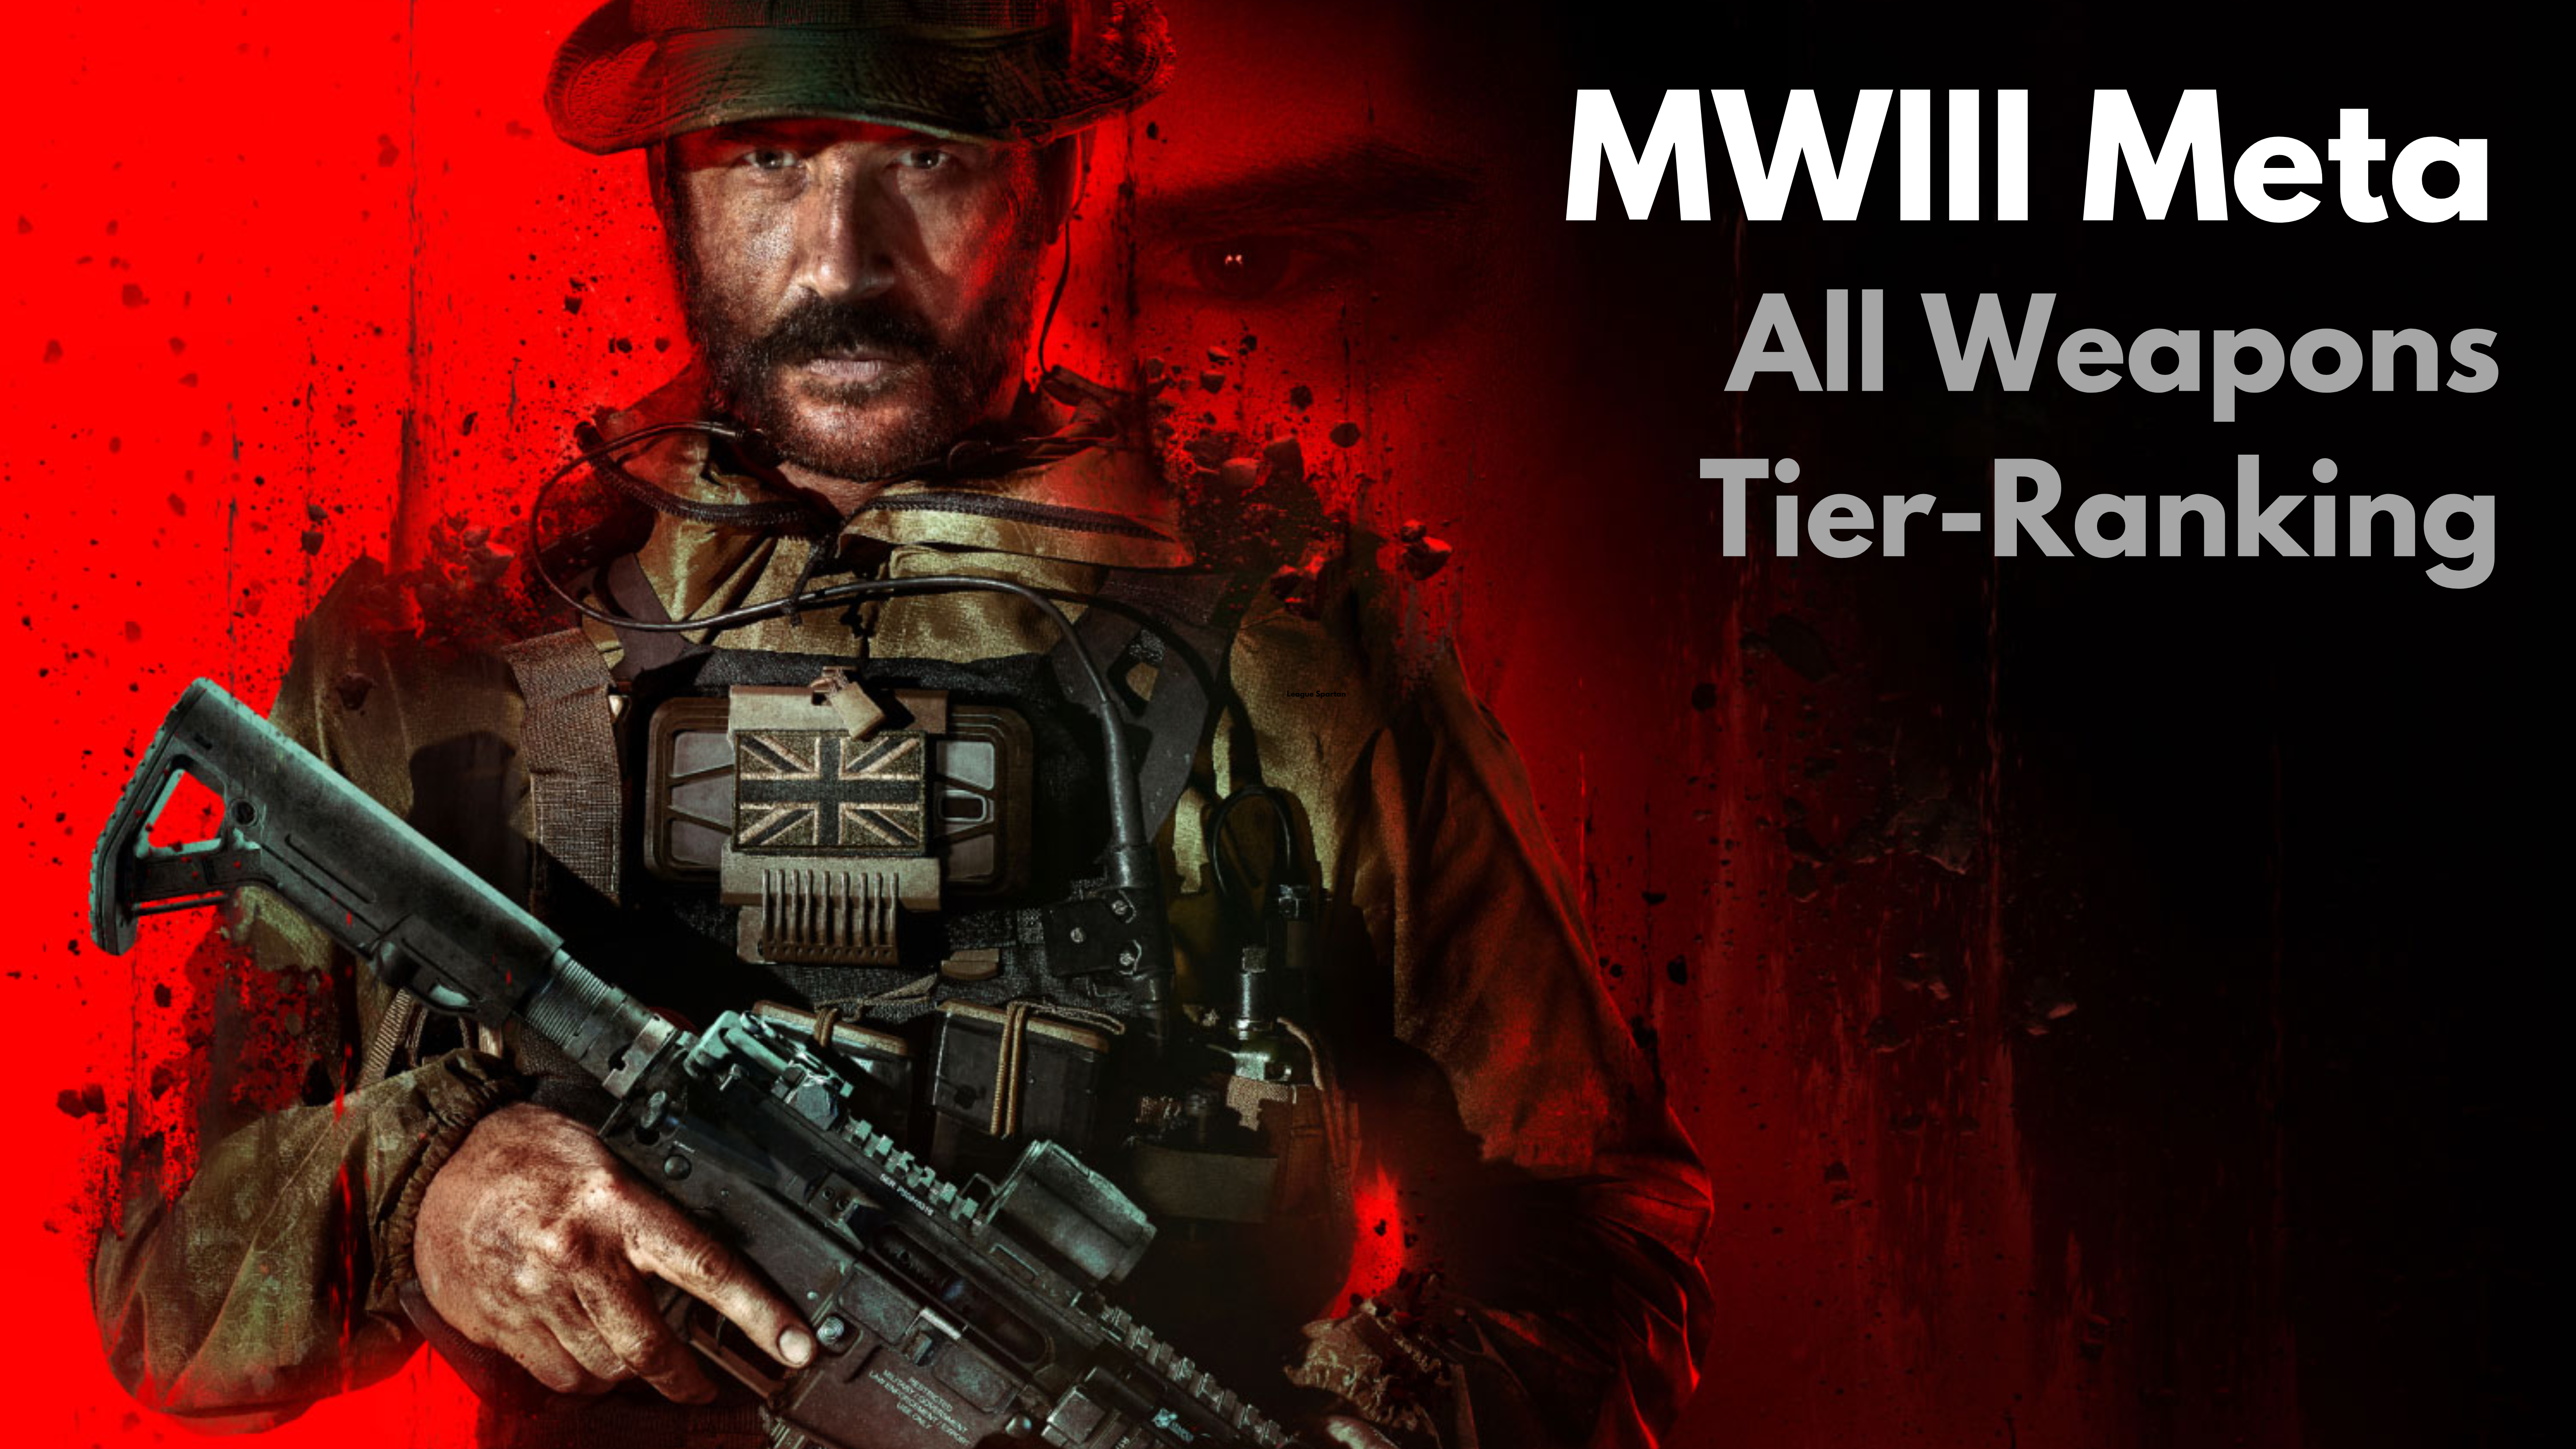 Top 5 Best Guns in Modern Warfare 3, Ranked